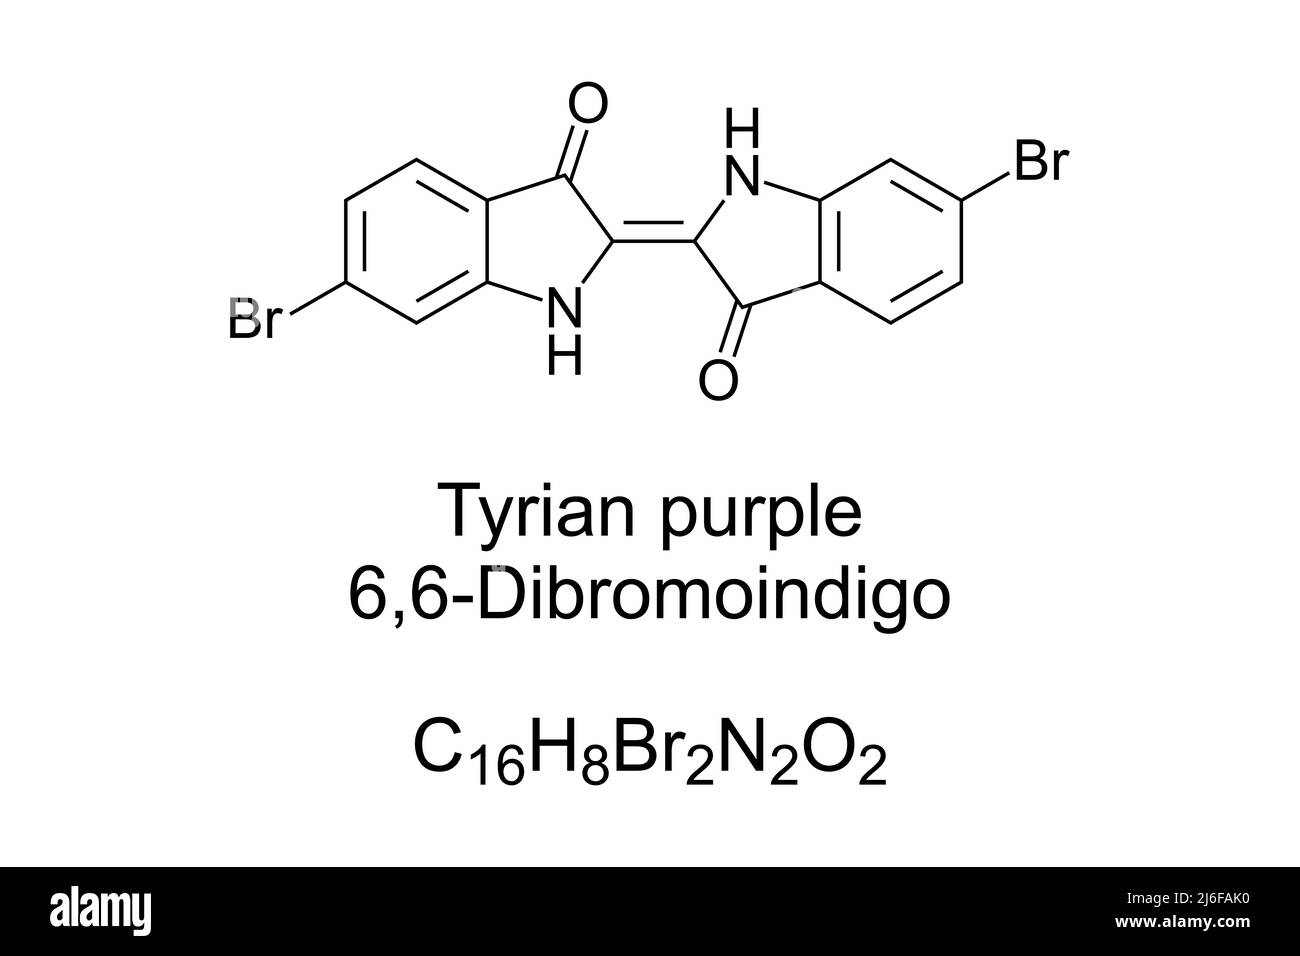 Púrpura tiriano, 6,6-Dibromoindigo, fórmula química y estructura. También rojo fenicio, púrpura real, o tinte imperial. Tinte natural rojizo-púrpura. Foto de stock